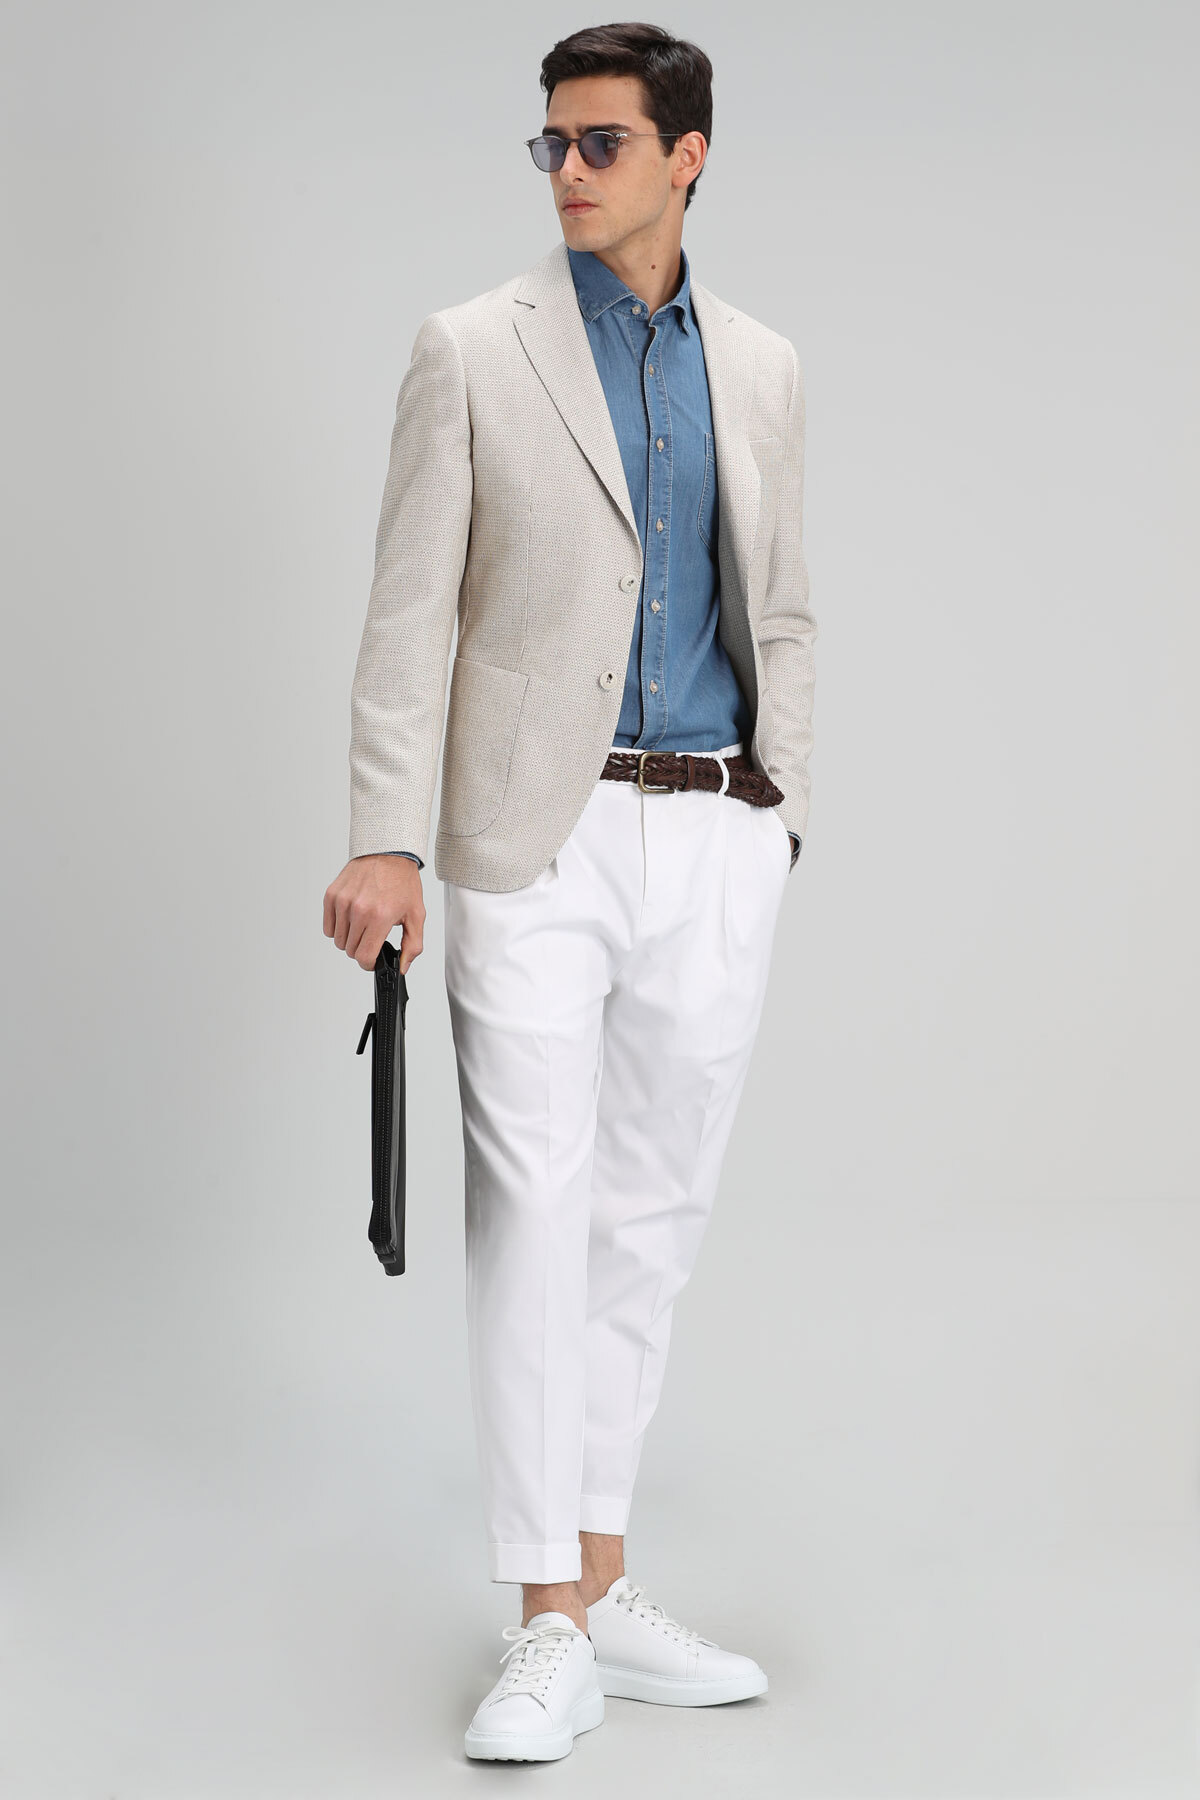 Roxy Spor Erkek Chino Pantolon Tailored Fit Beyaz